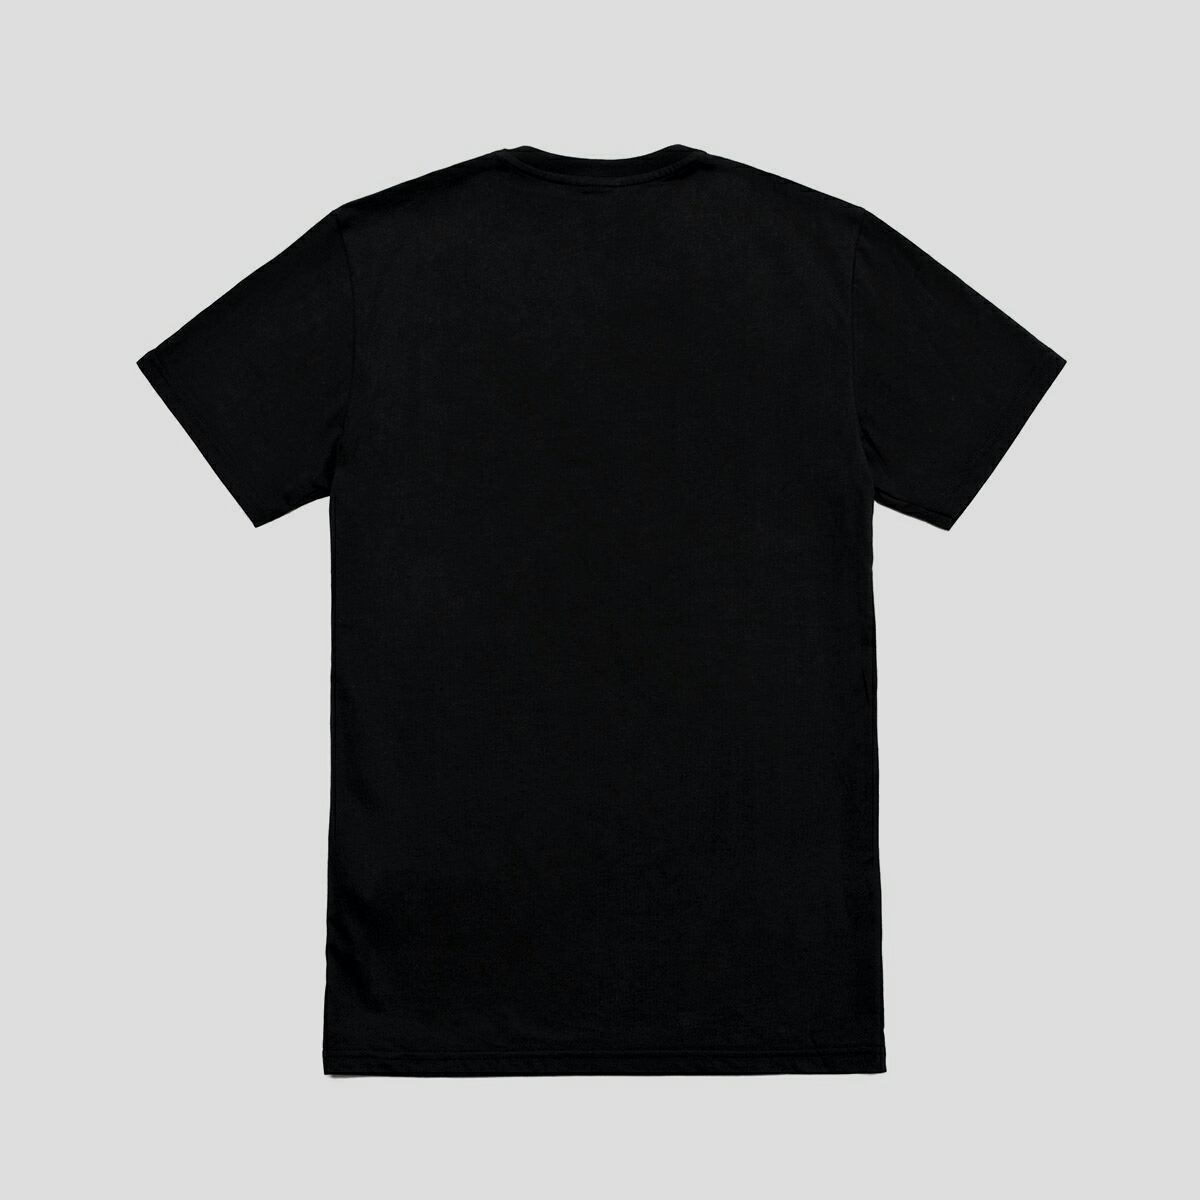 Black Blank T Shirt Template